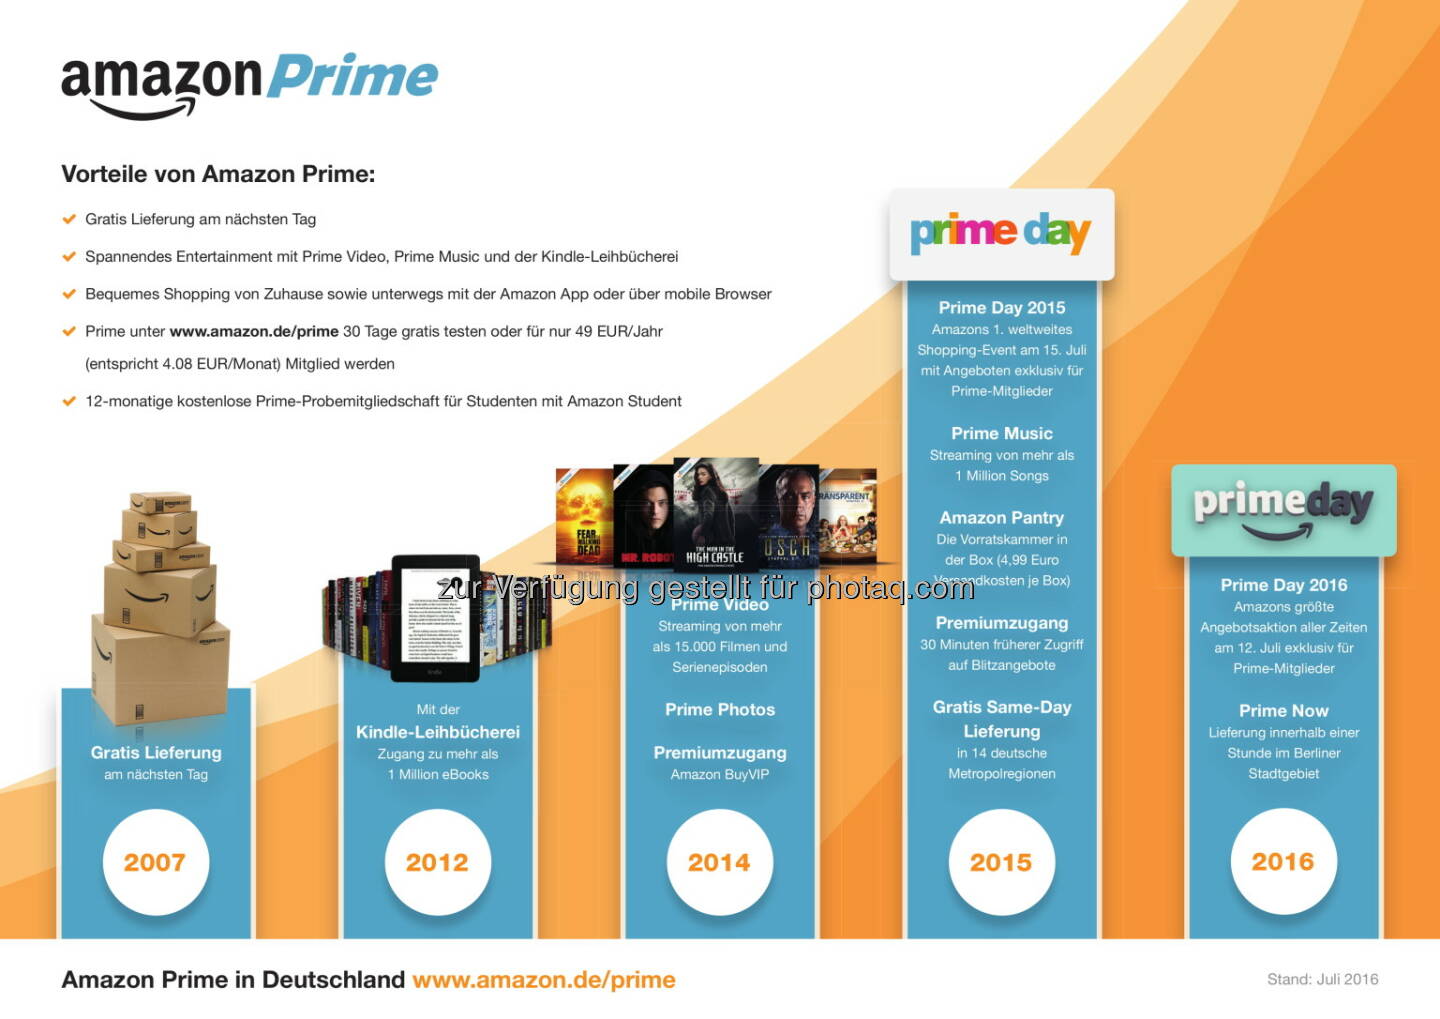 Amazone Prime Day 2016 : Mehr als 7 Millionen verkaufte Produkte auf Amazon.de : Fotocredit: amazon.de